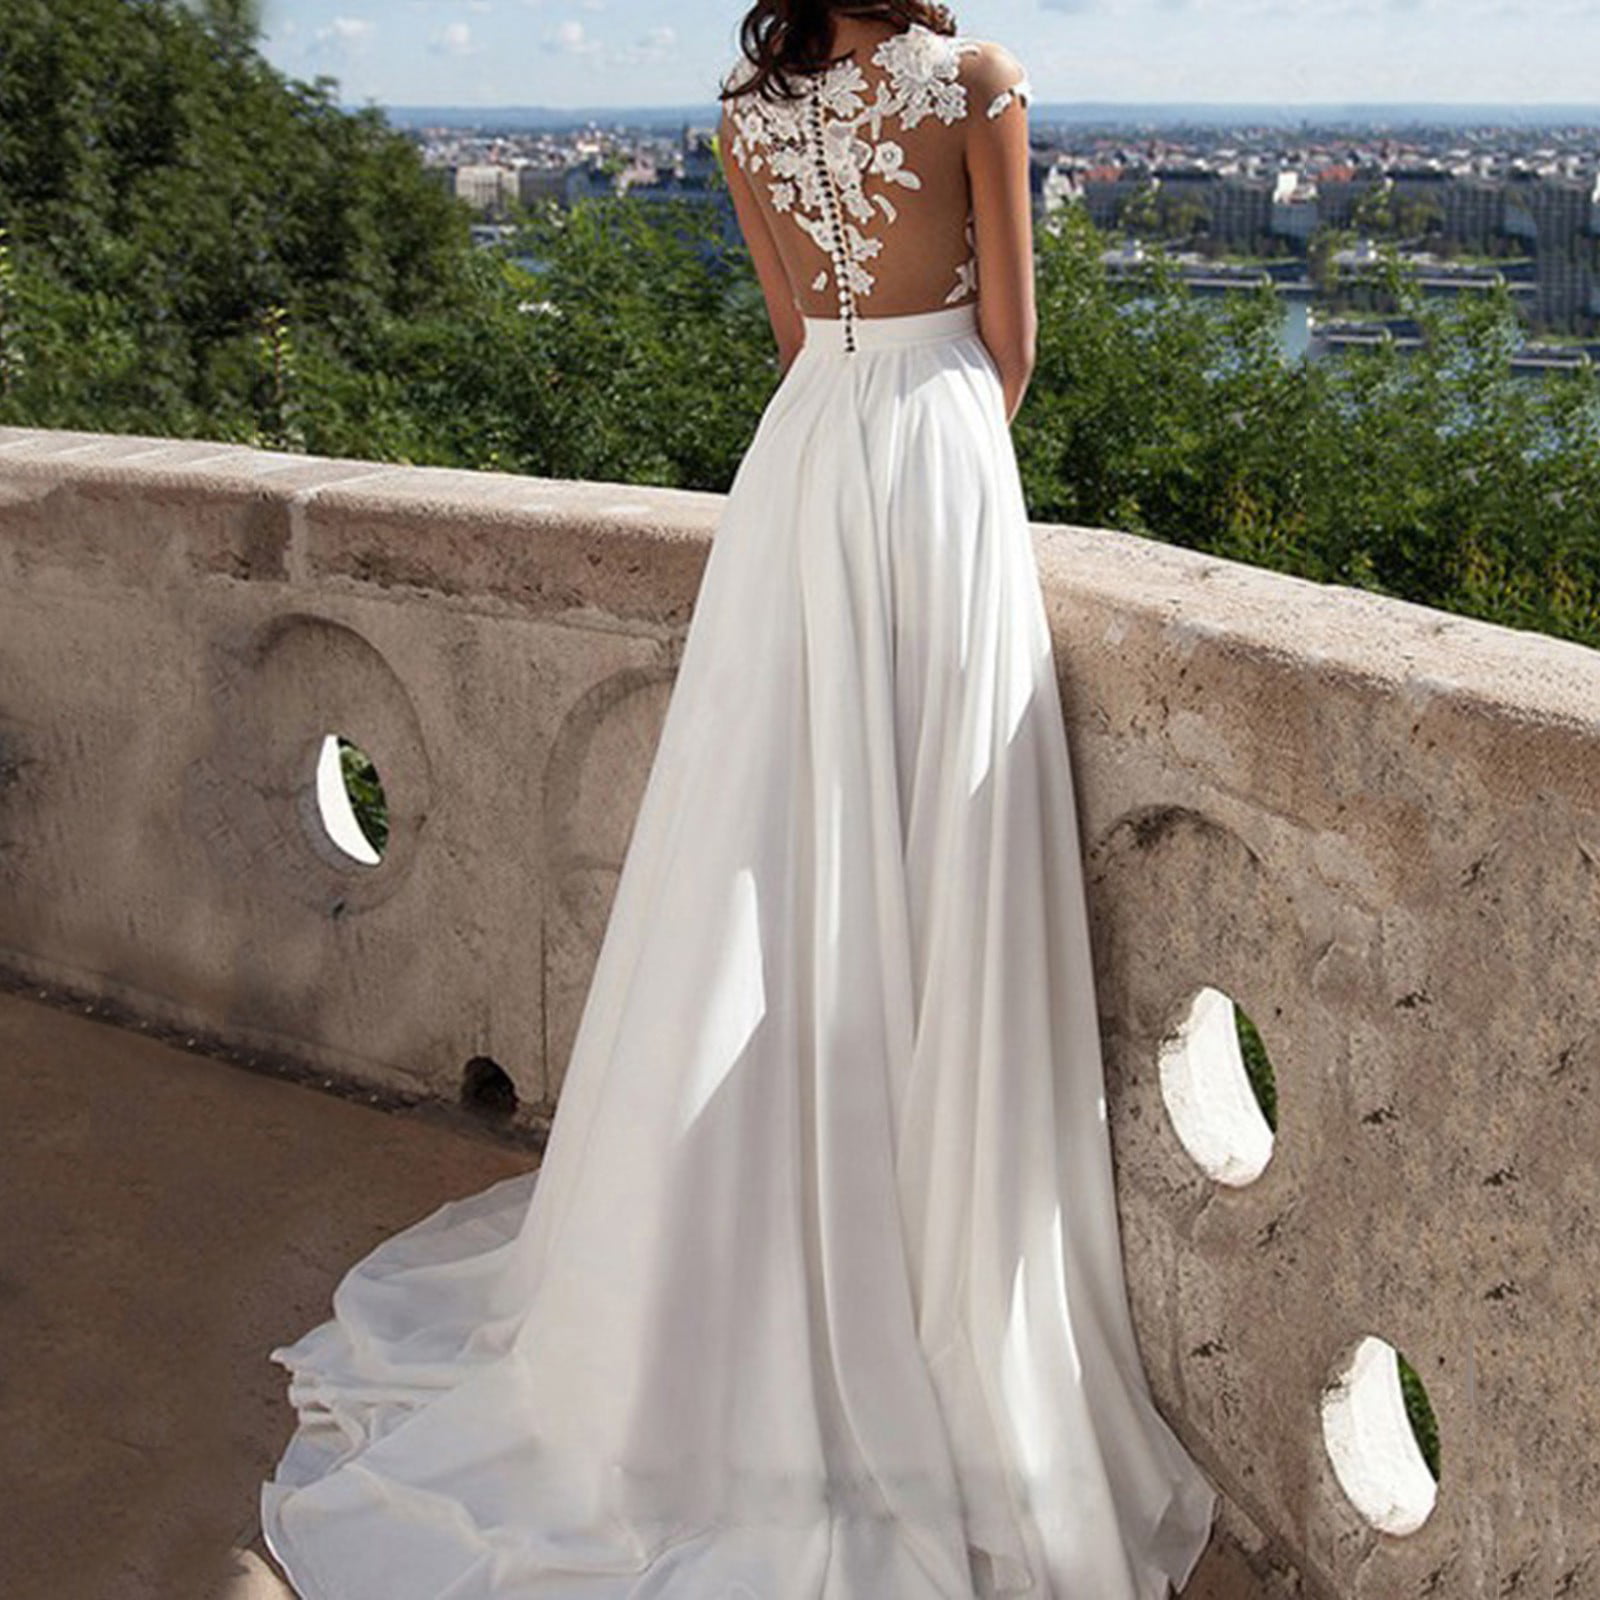 Beach Wedding Dresses-Lightweight, airy and romantic dresses-Jasmine Bridal